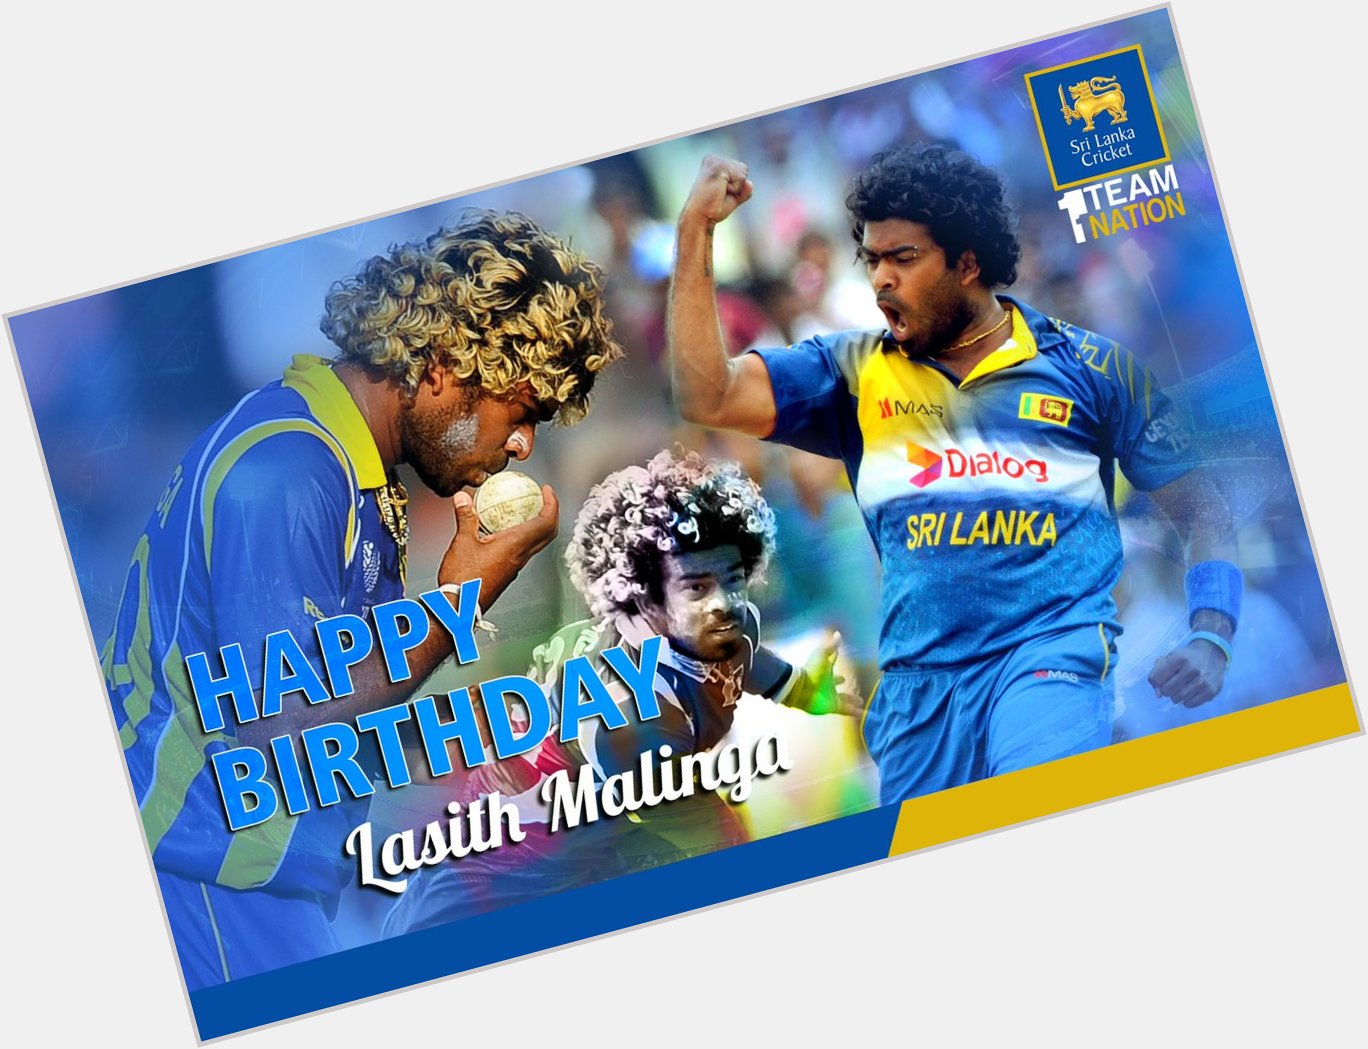 Happy Birthday to Lasith Malinga! 